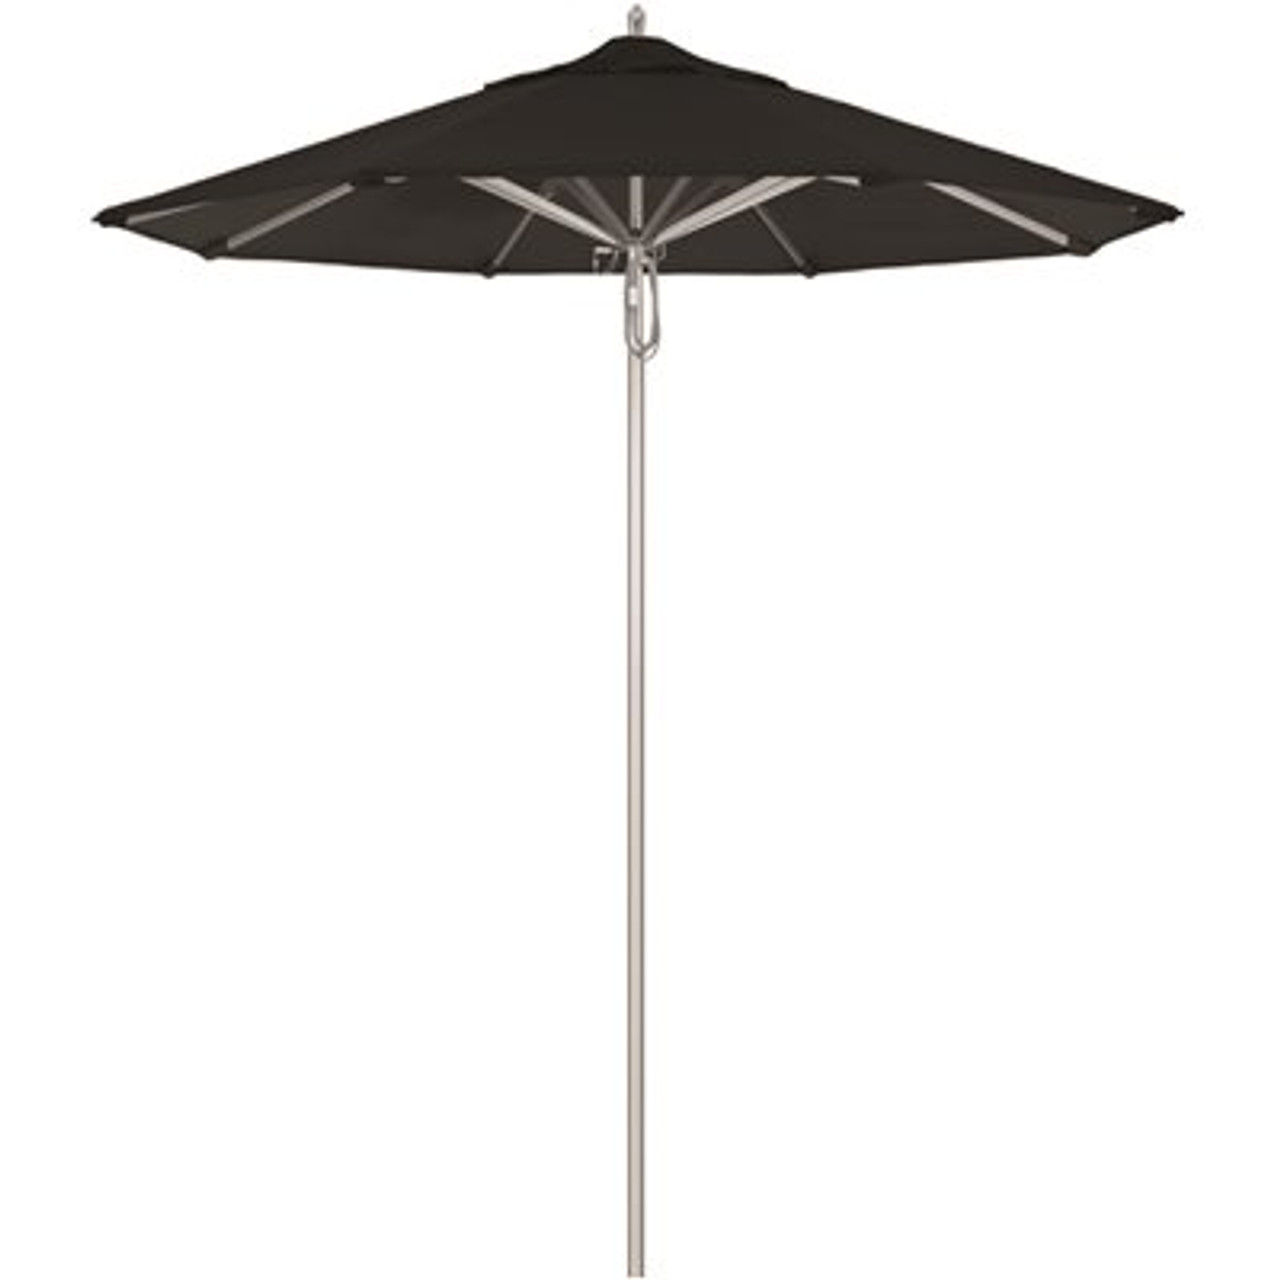 California Umbrella 7.5 ft. Silver Aluminum Commercial Market Patio Umbrella with Pulley Lift in Black Sunbrella